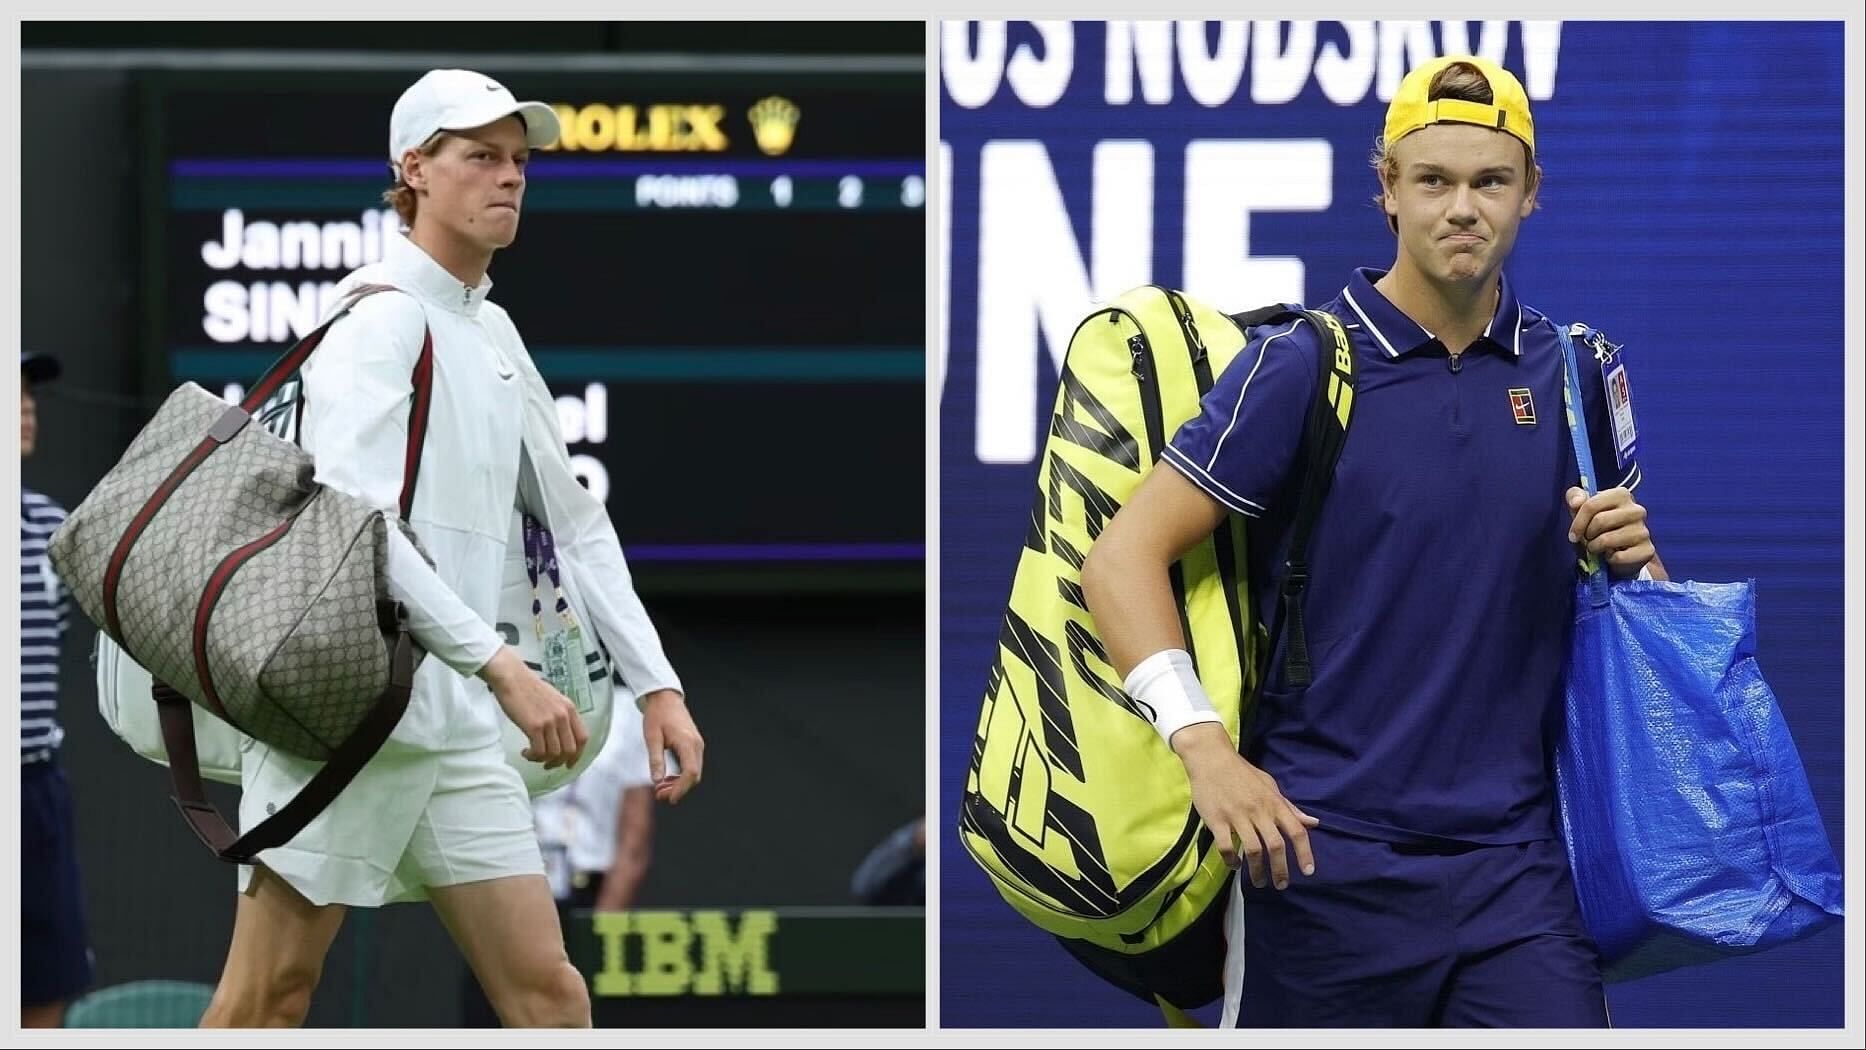 Your favorite bag? - Holger Rune hilariously revisits his IKEA bag  entrance at US Open after Jannik Sinner's Gucci debut at Wimbledon